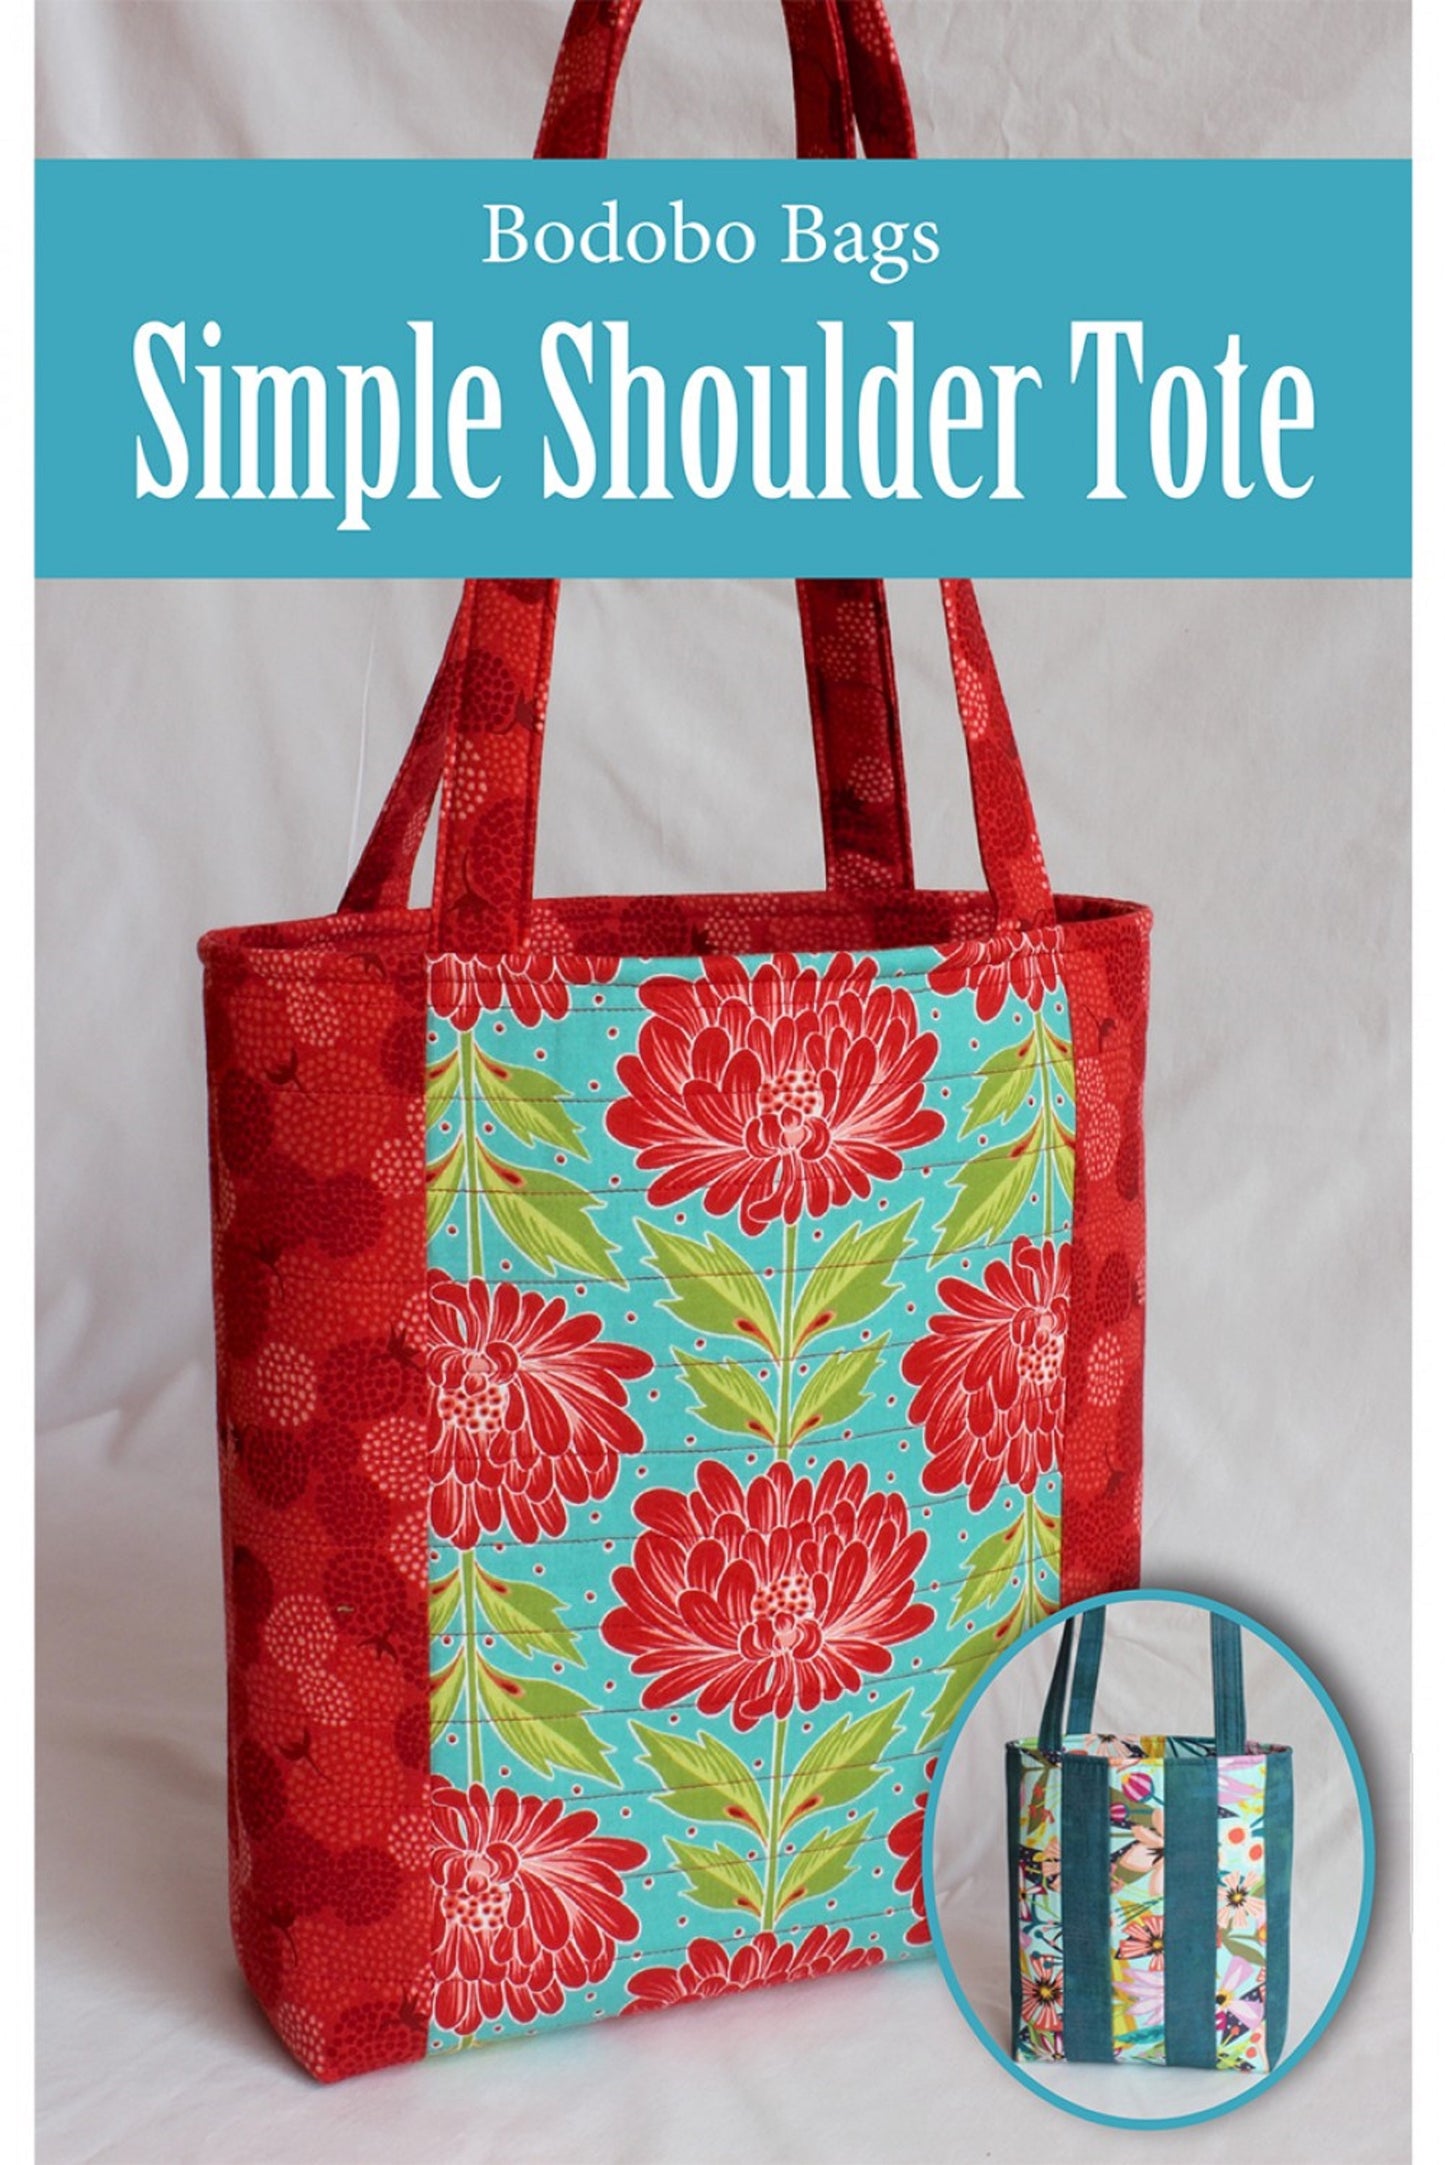 Simple Shoulder Tote by Bodobo Bags